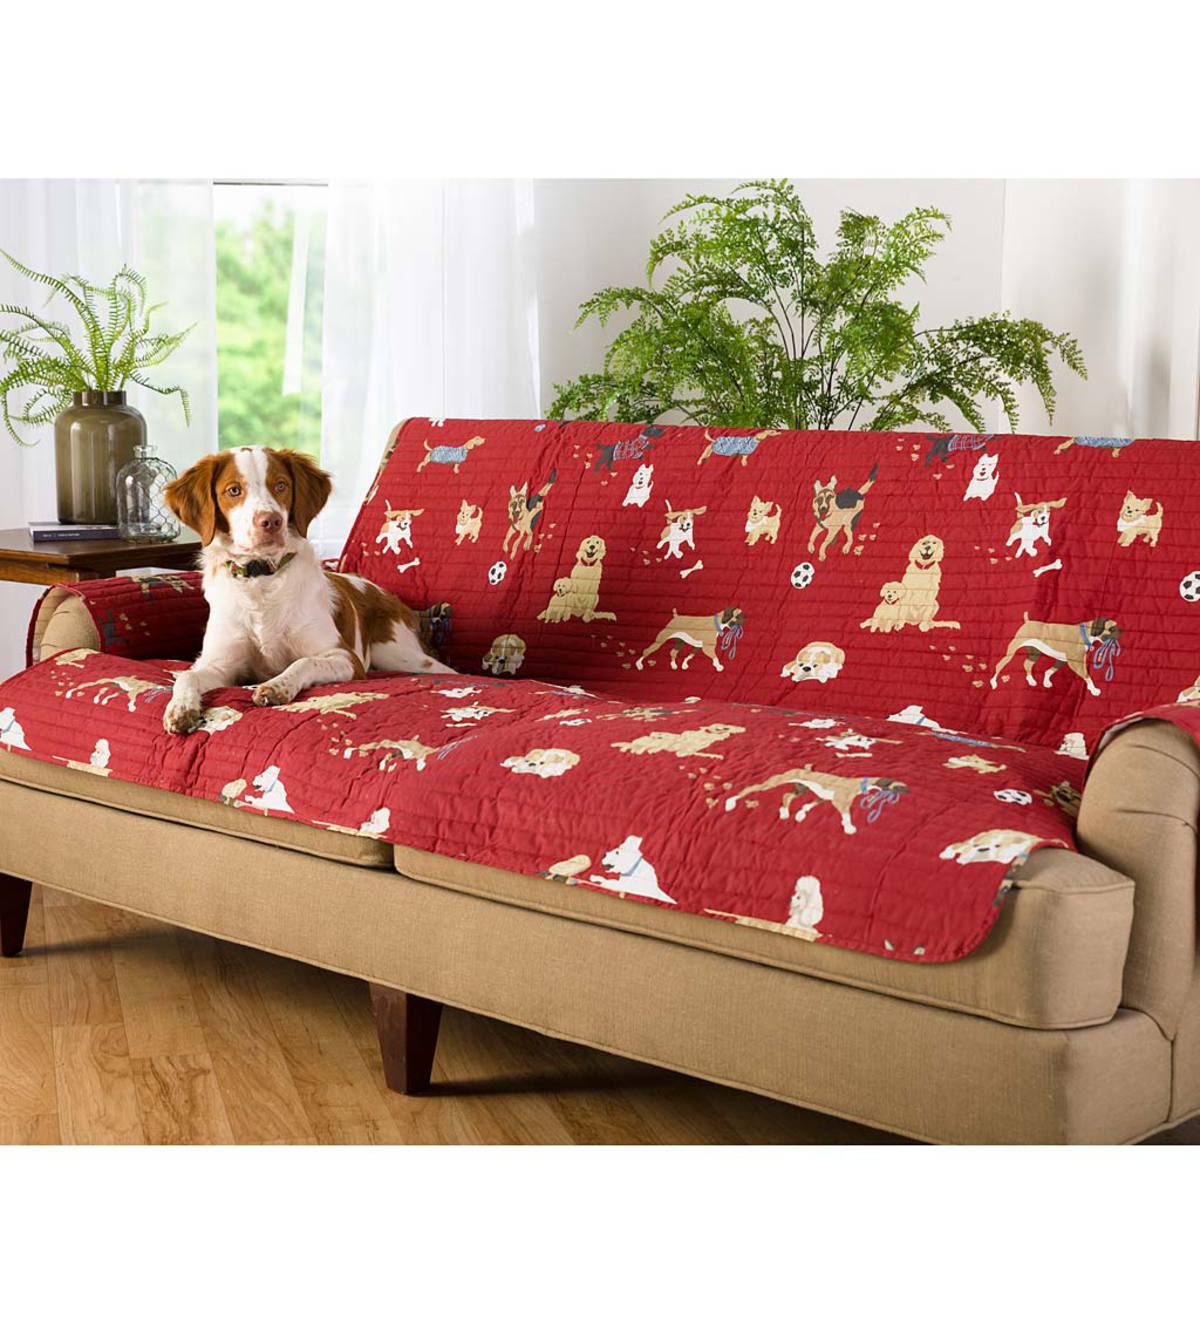 Protective Pet Sofa Cover, Dog Park Design